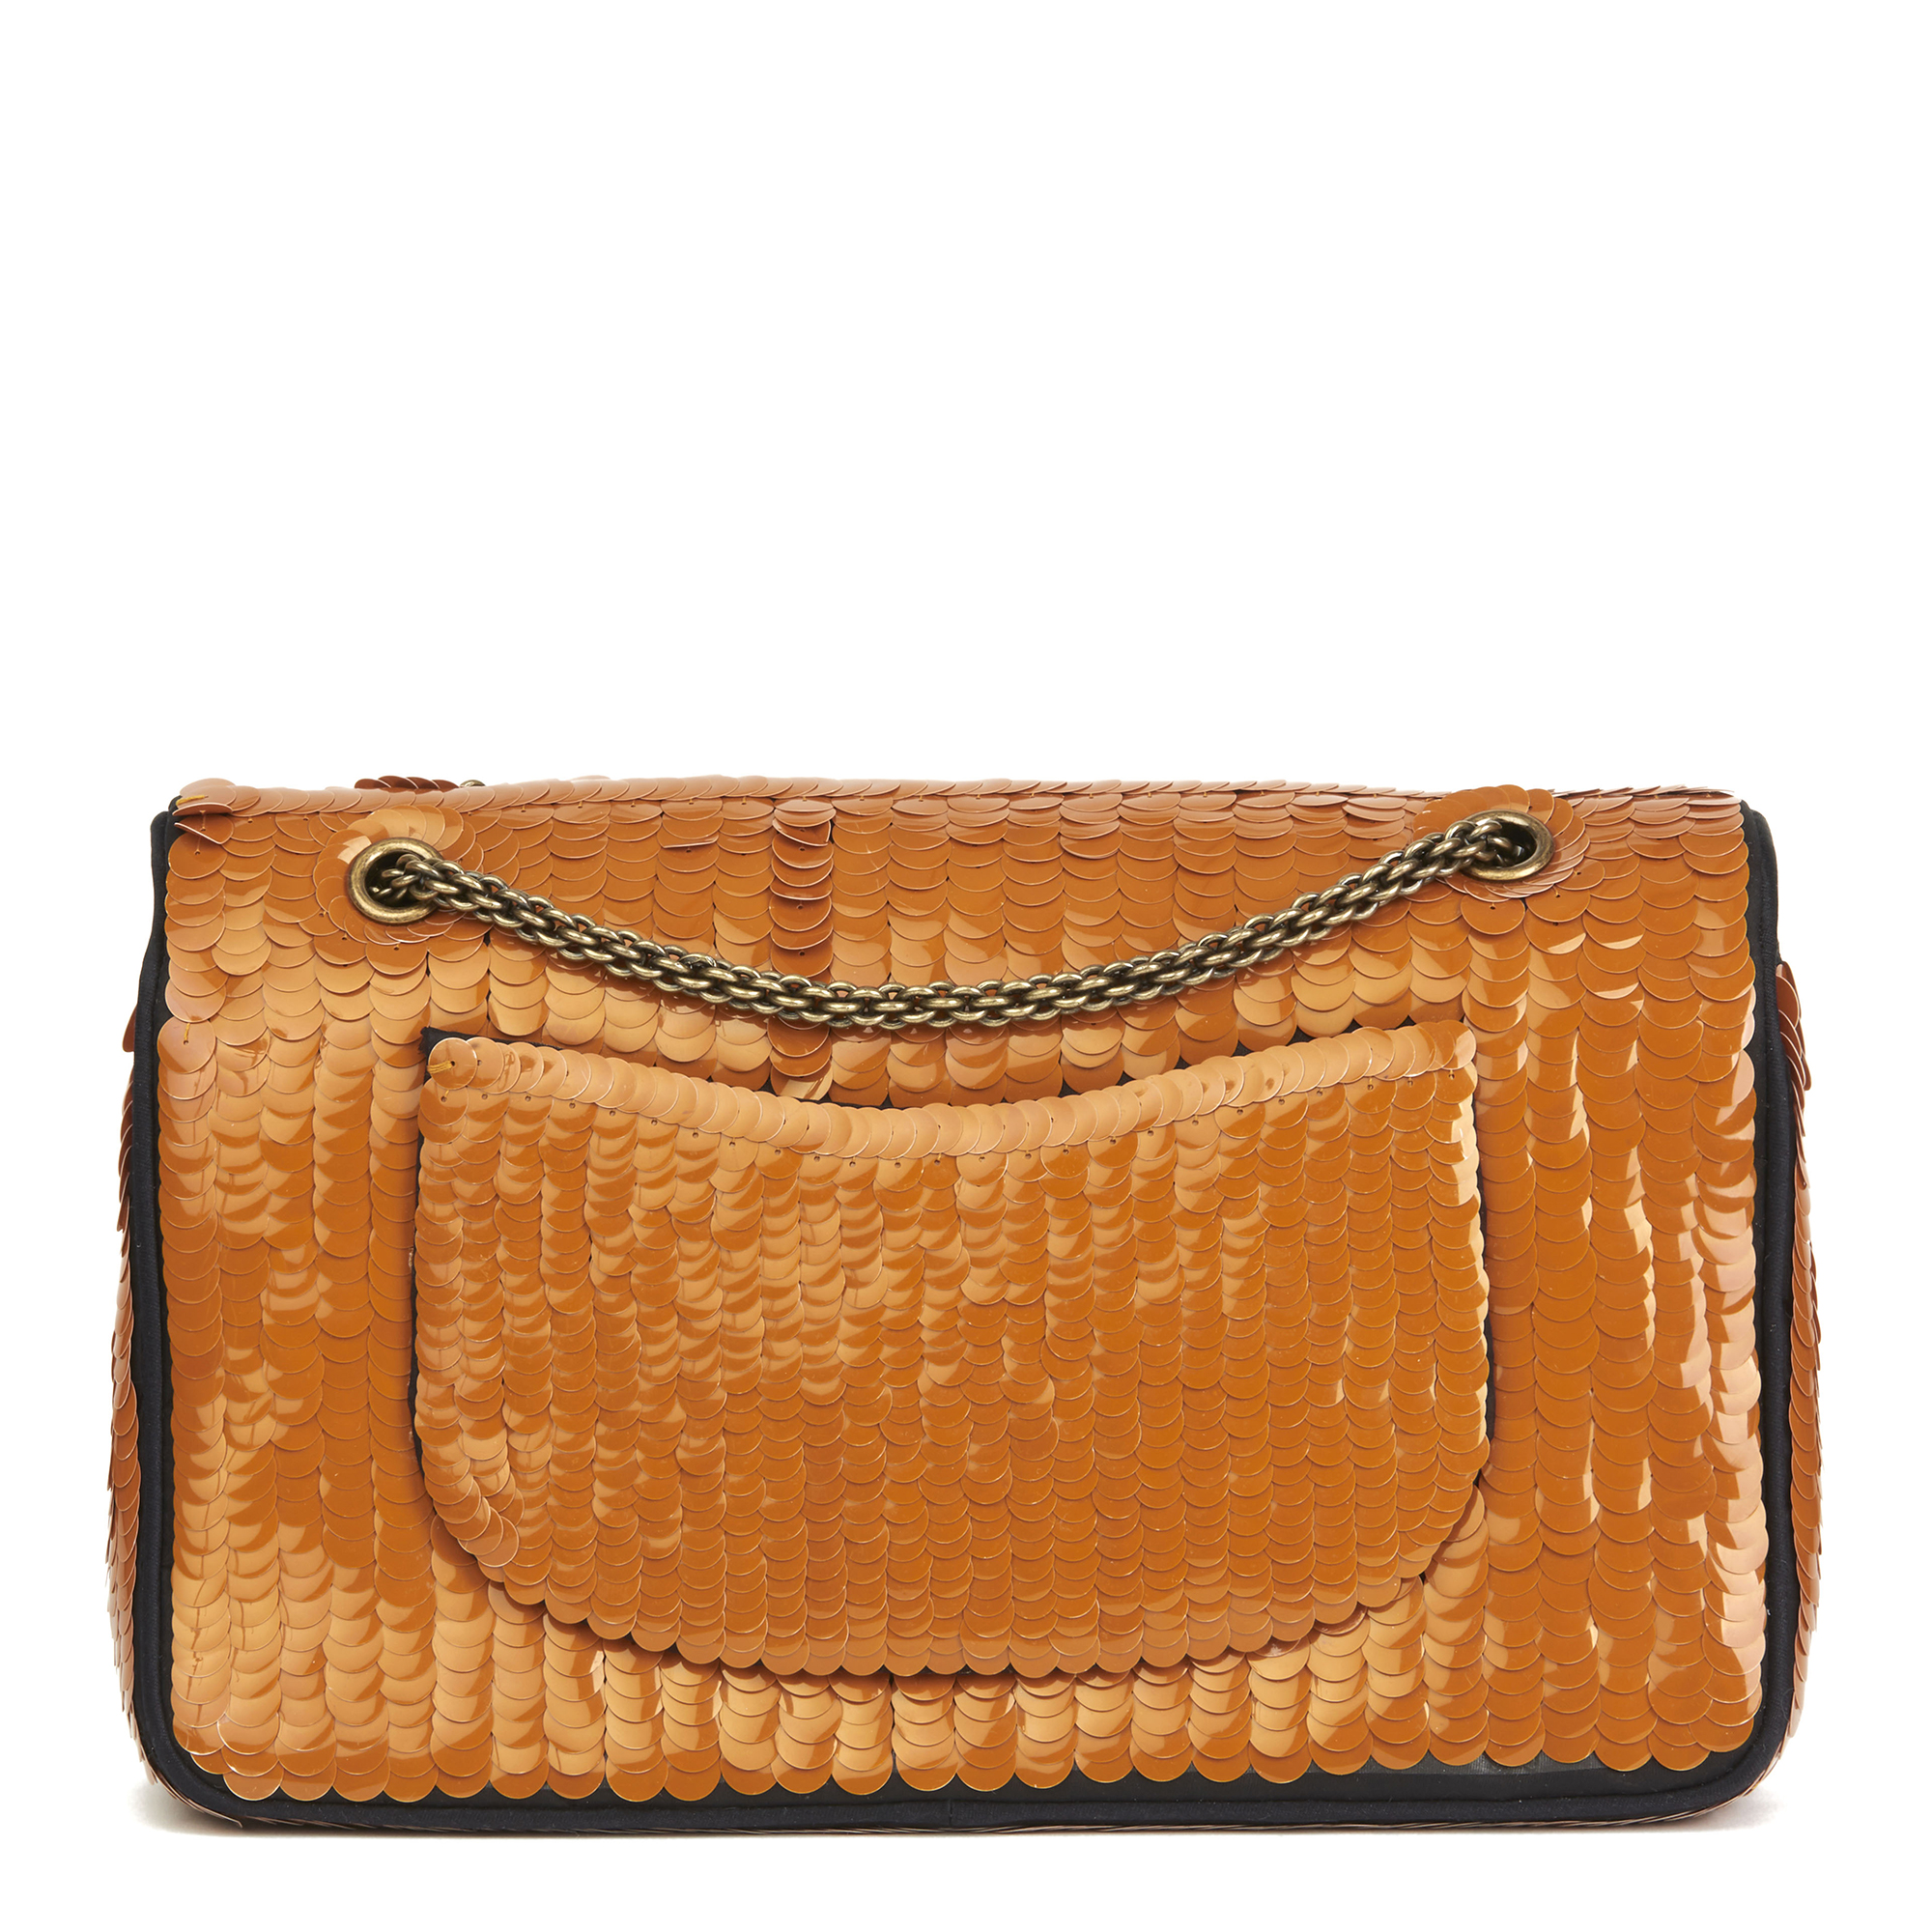 Chanel Medium Classic Double Flap Bag - Image 8 of 10